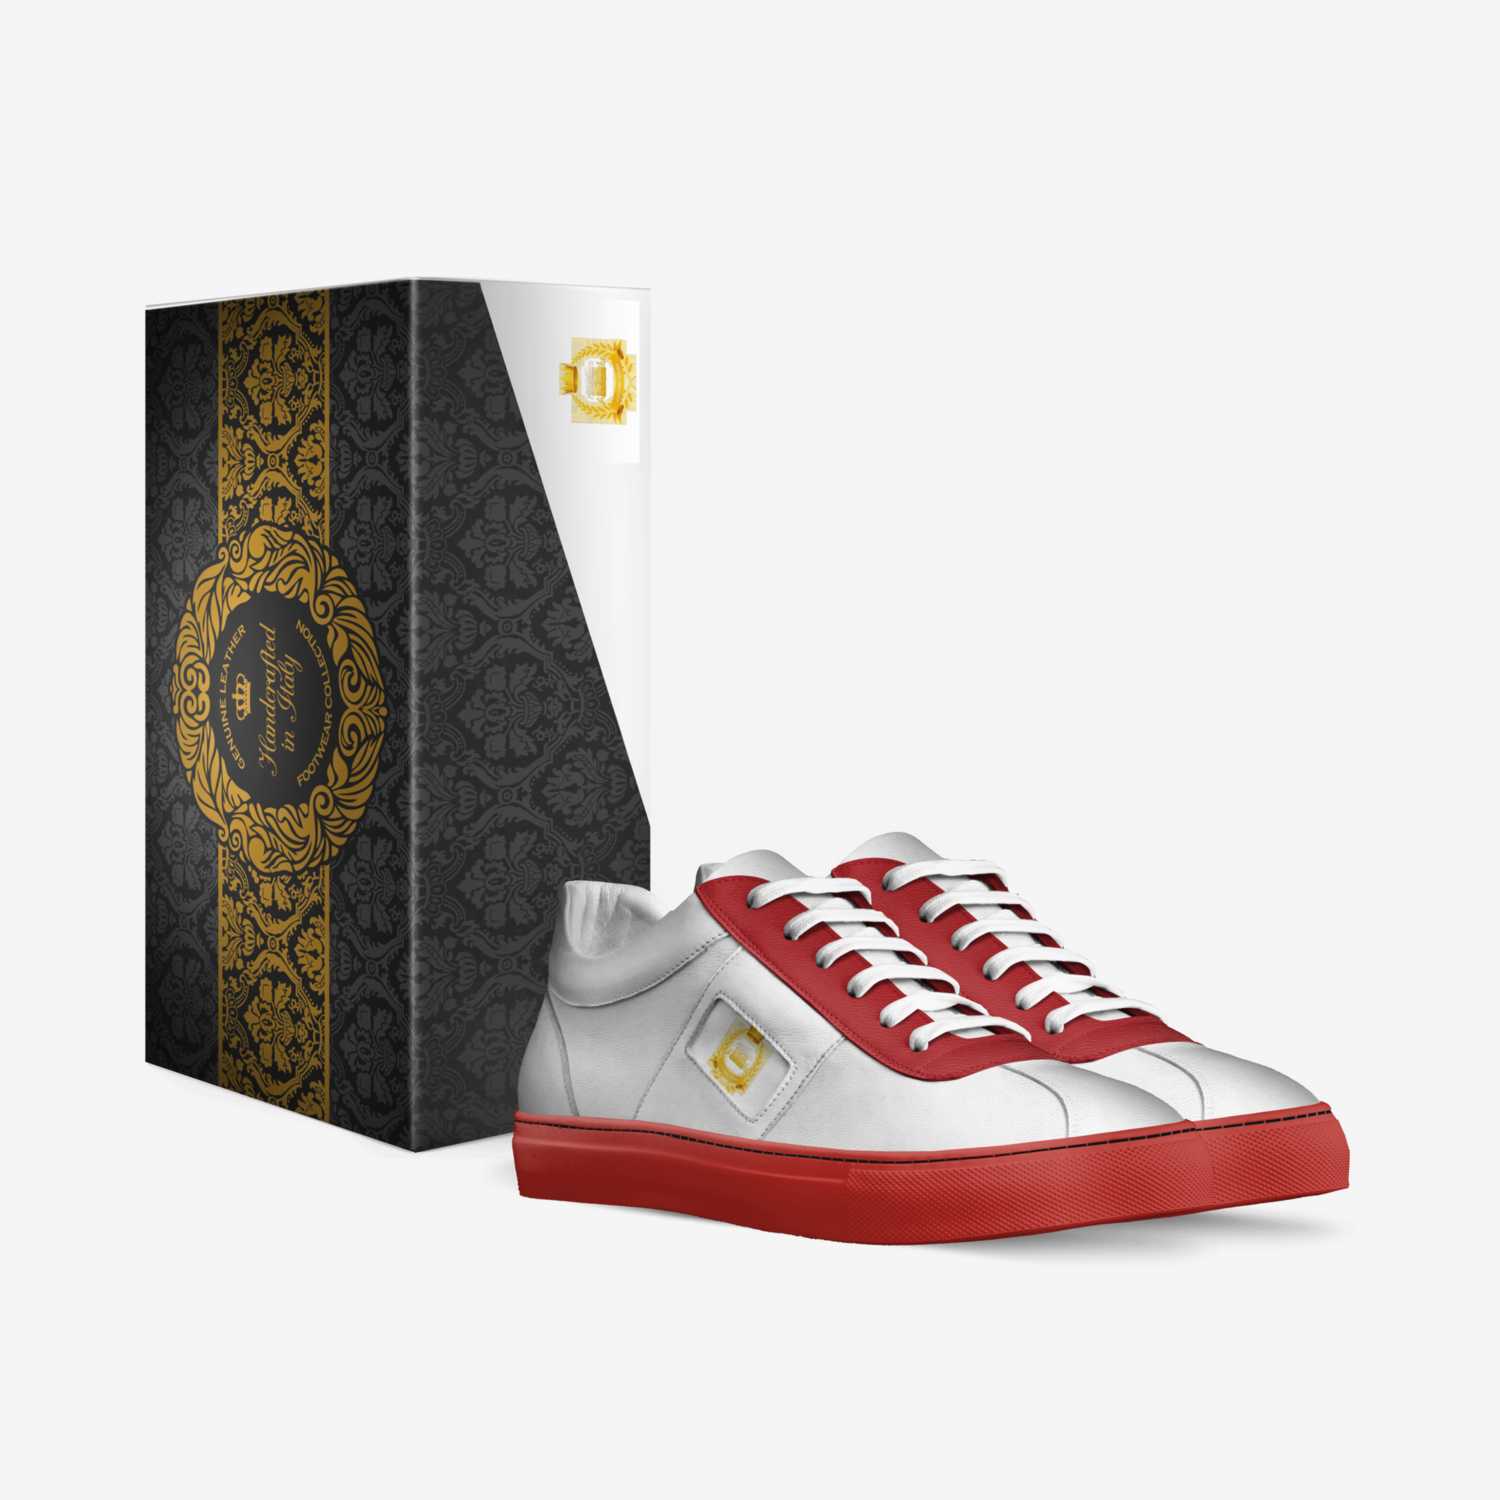 Kingdom Akademiks custom made in Italy shoes by Shae Thomas | Box view